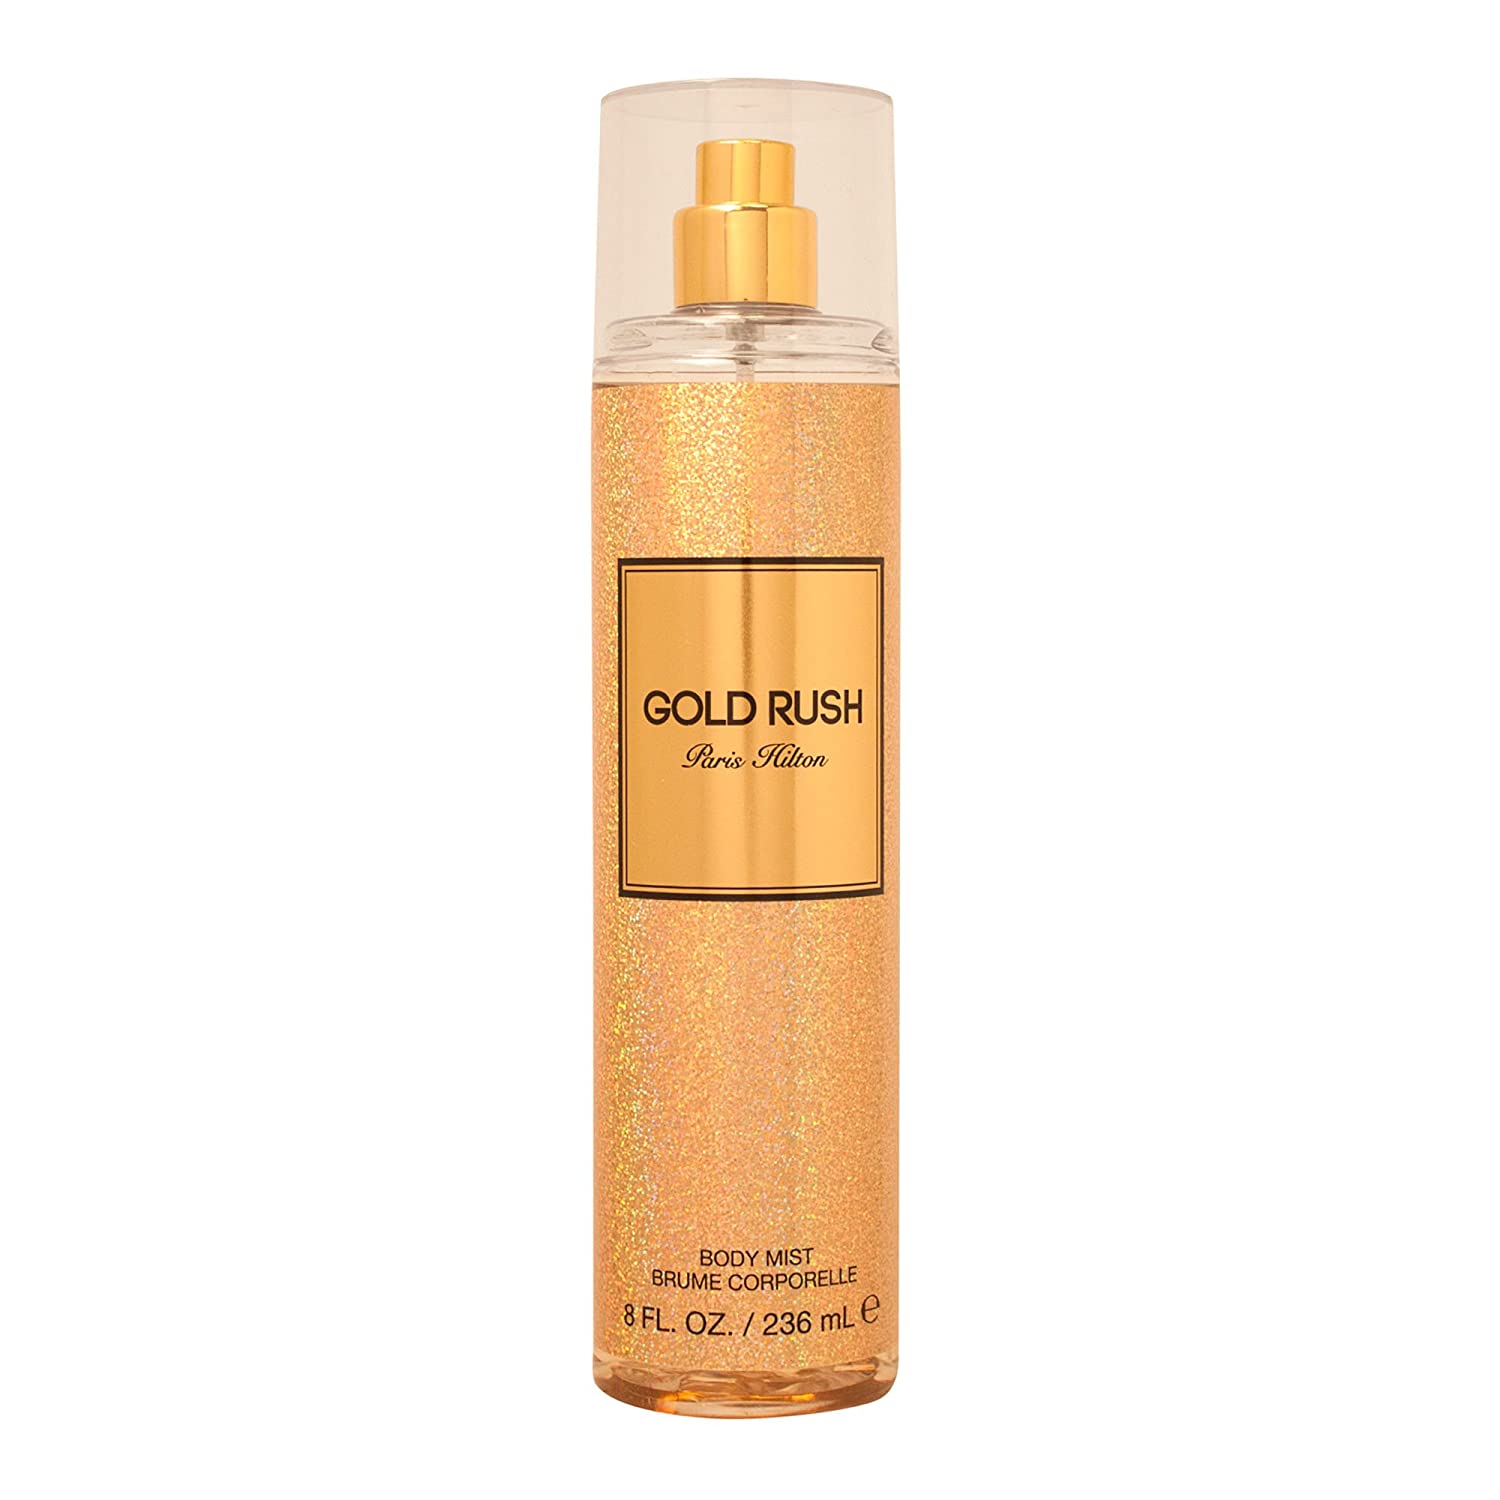 PARIS HILTON - Gold Rush para mujer / 236 ml Body Mist Spray